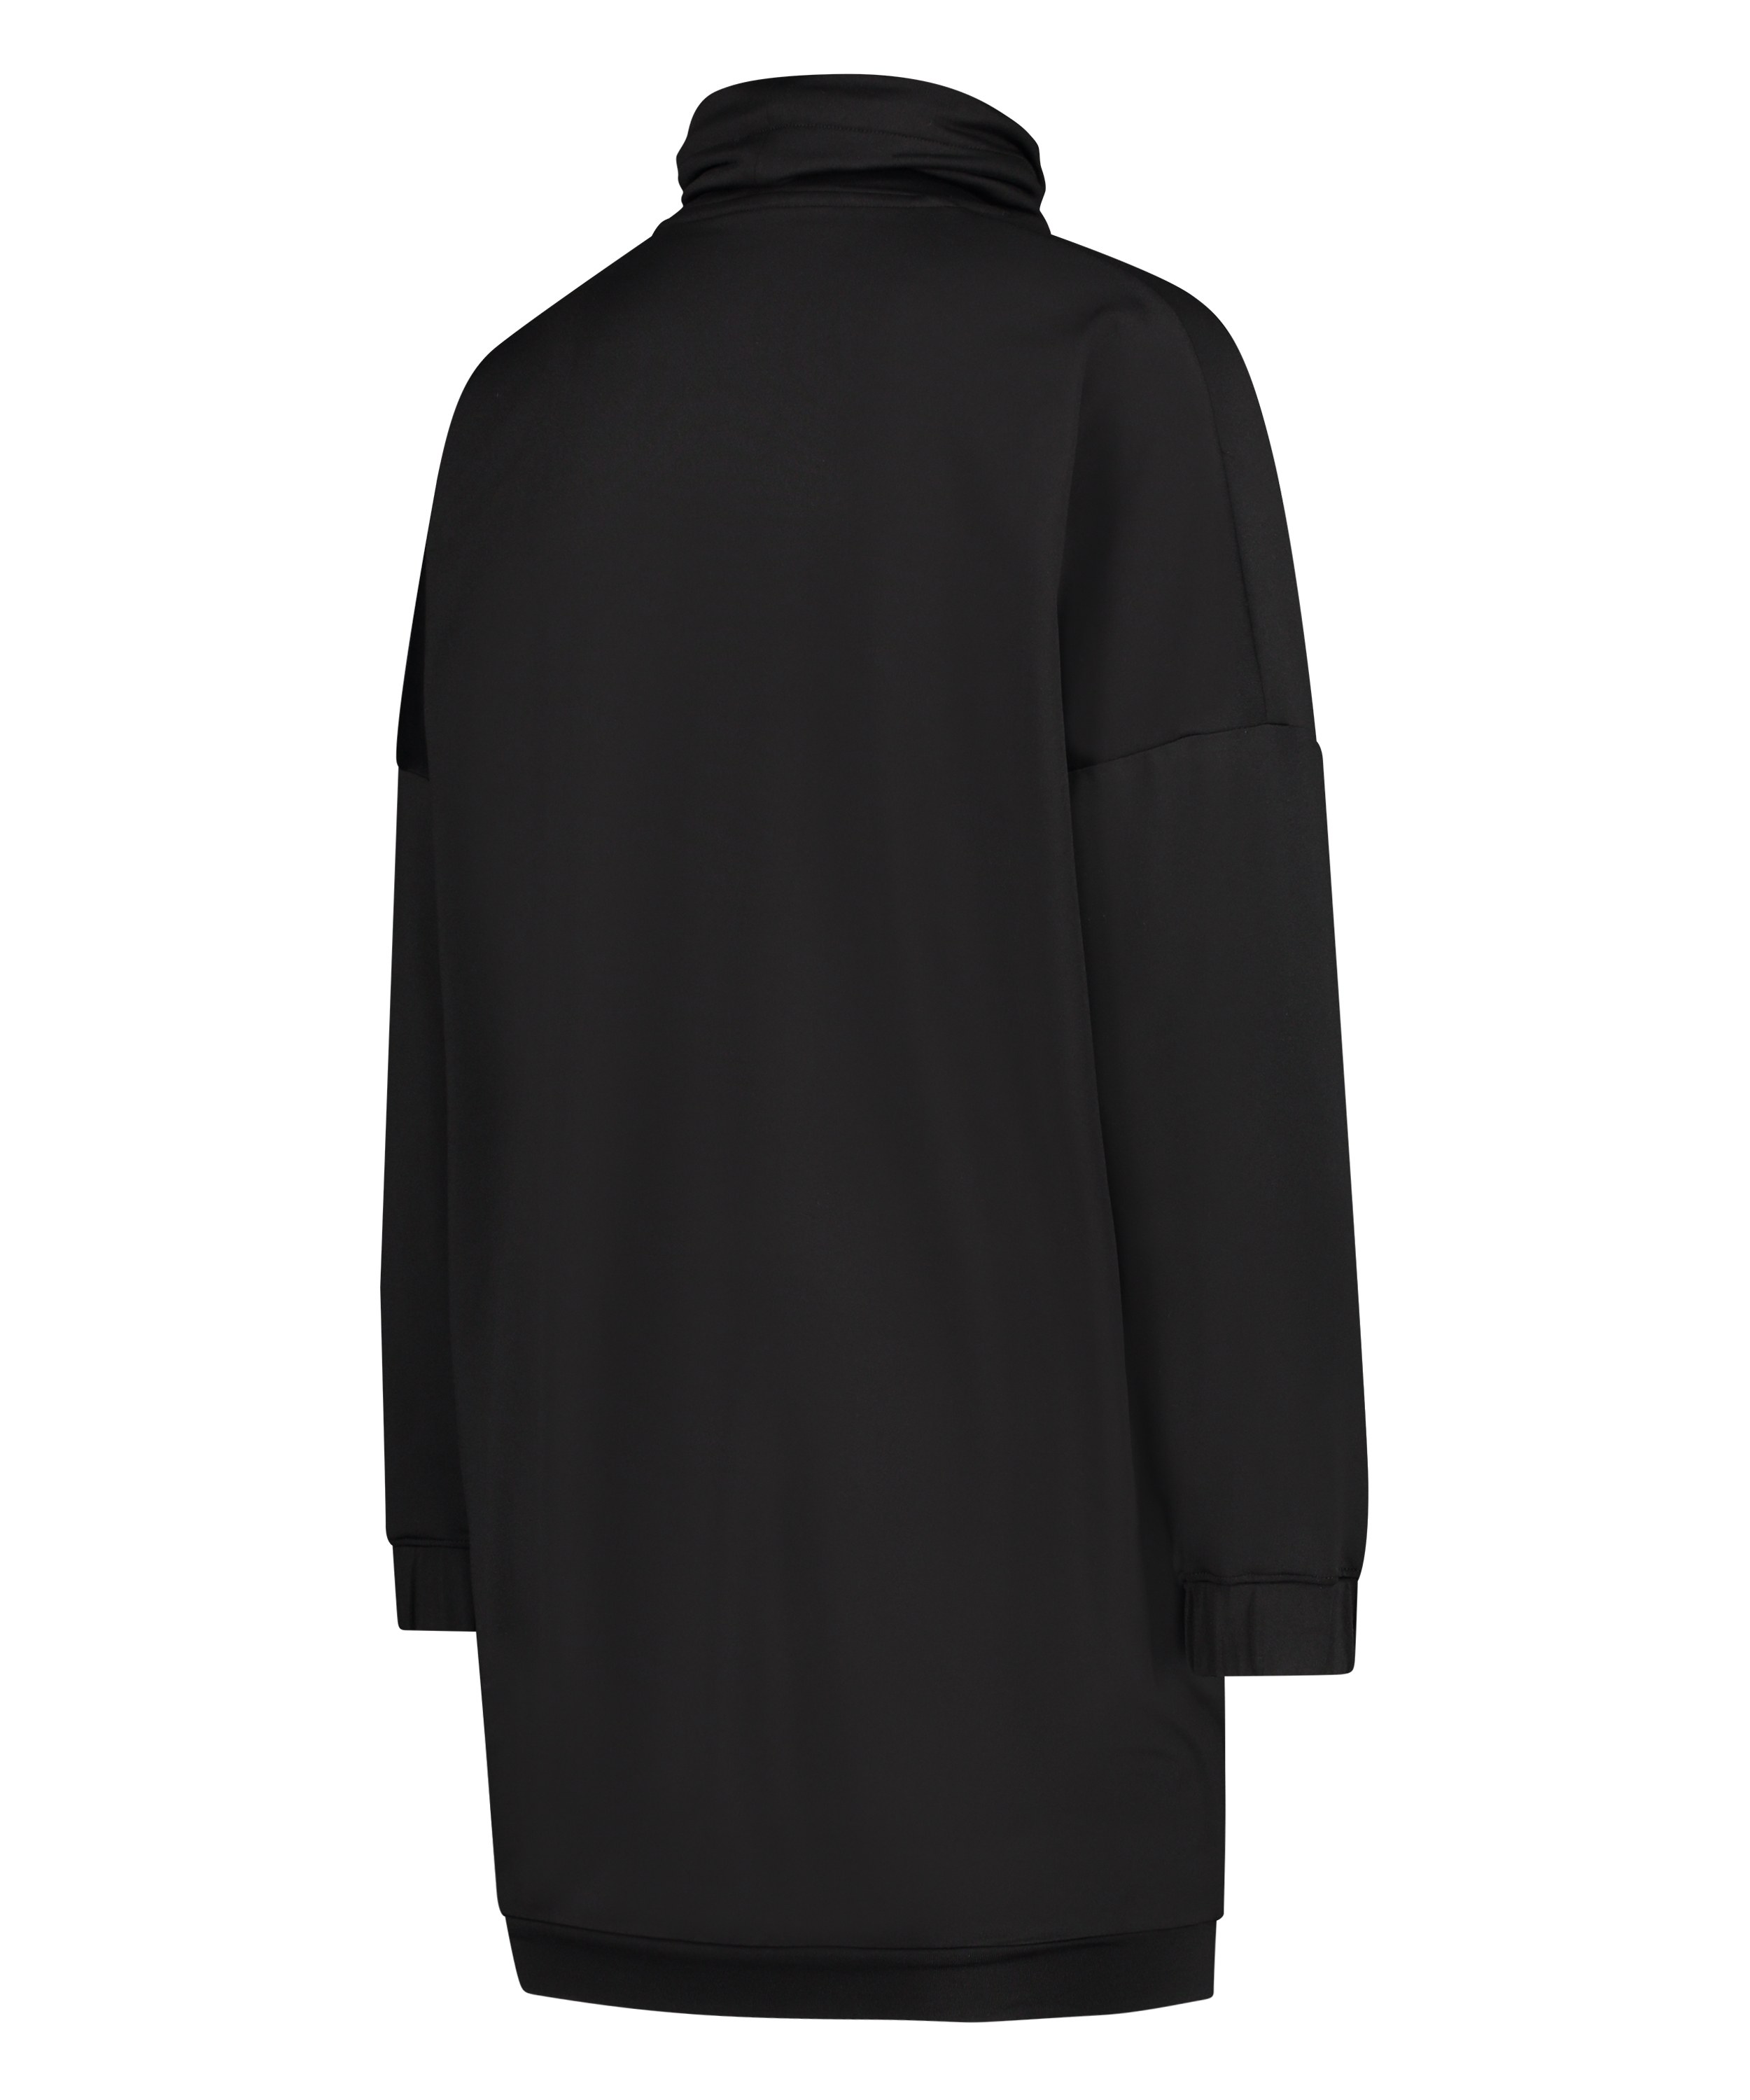 HKMX Yona Sweater Dress, Black, main